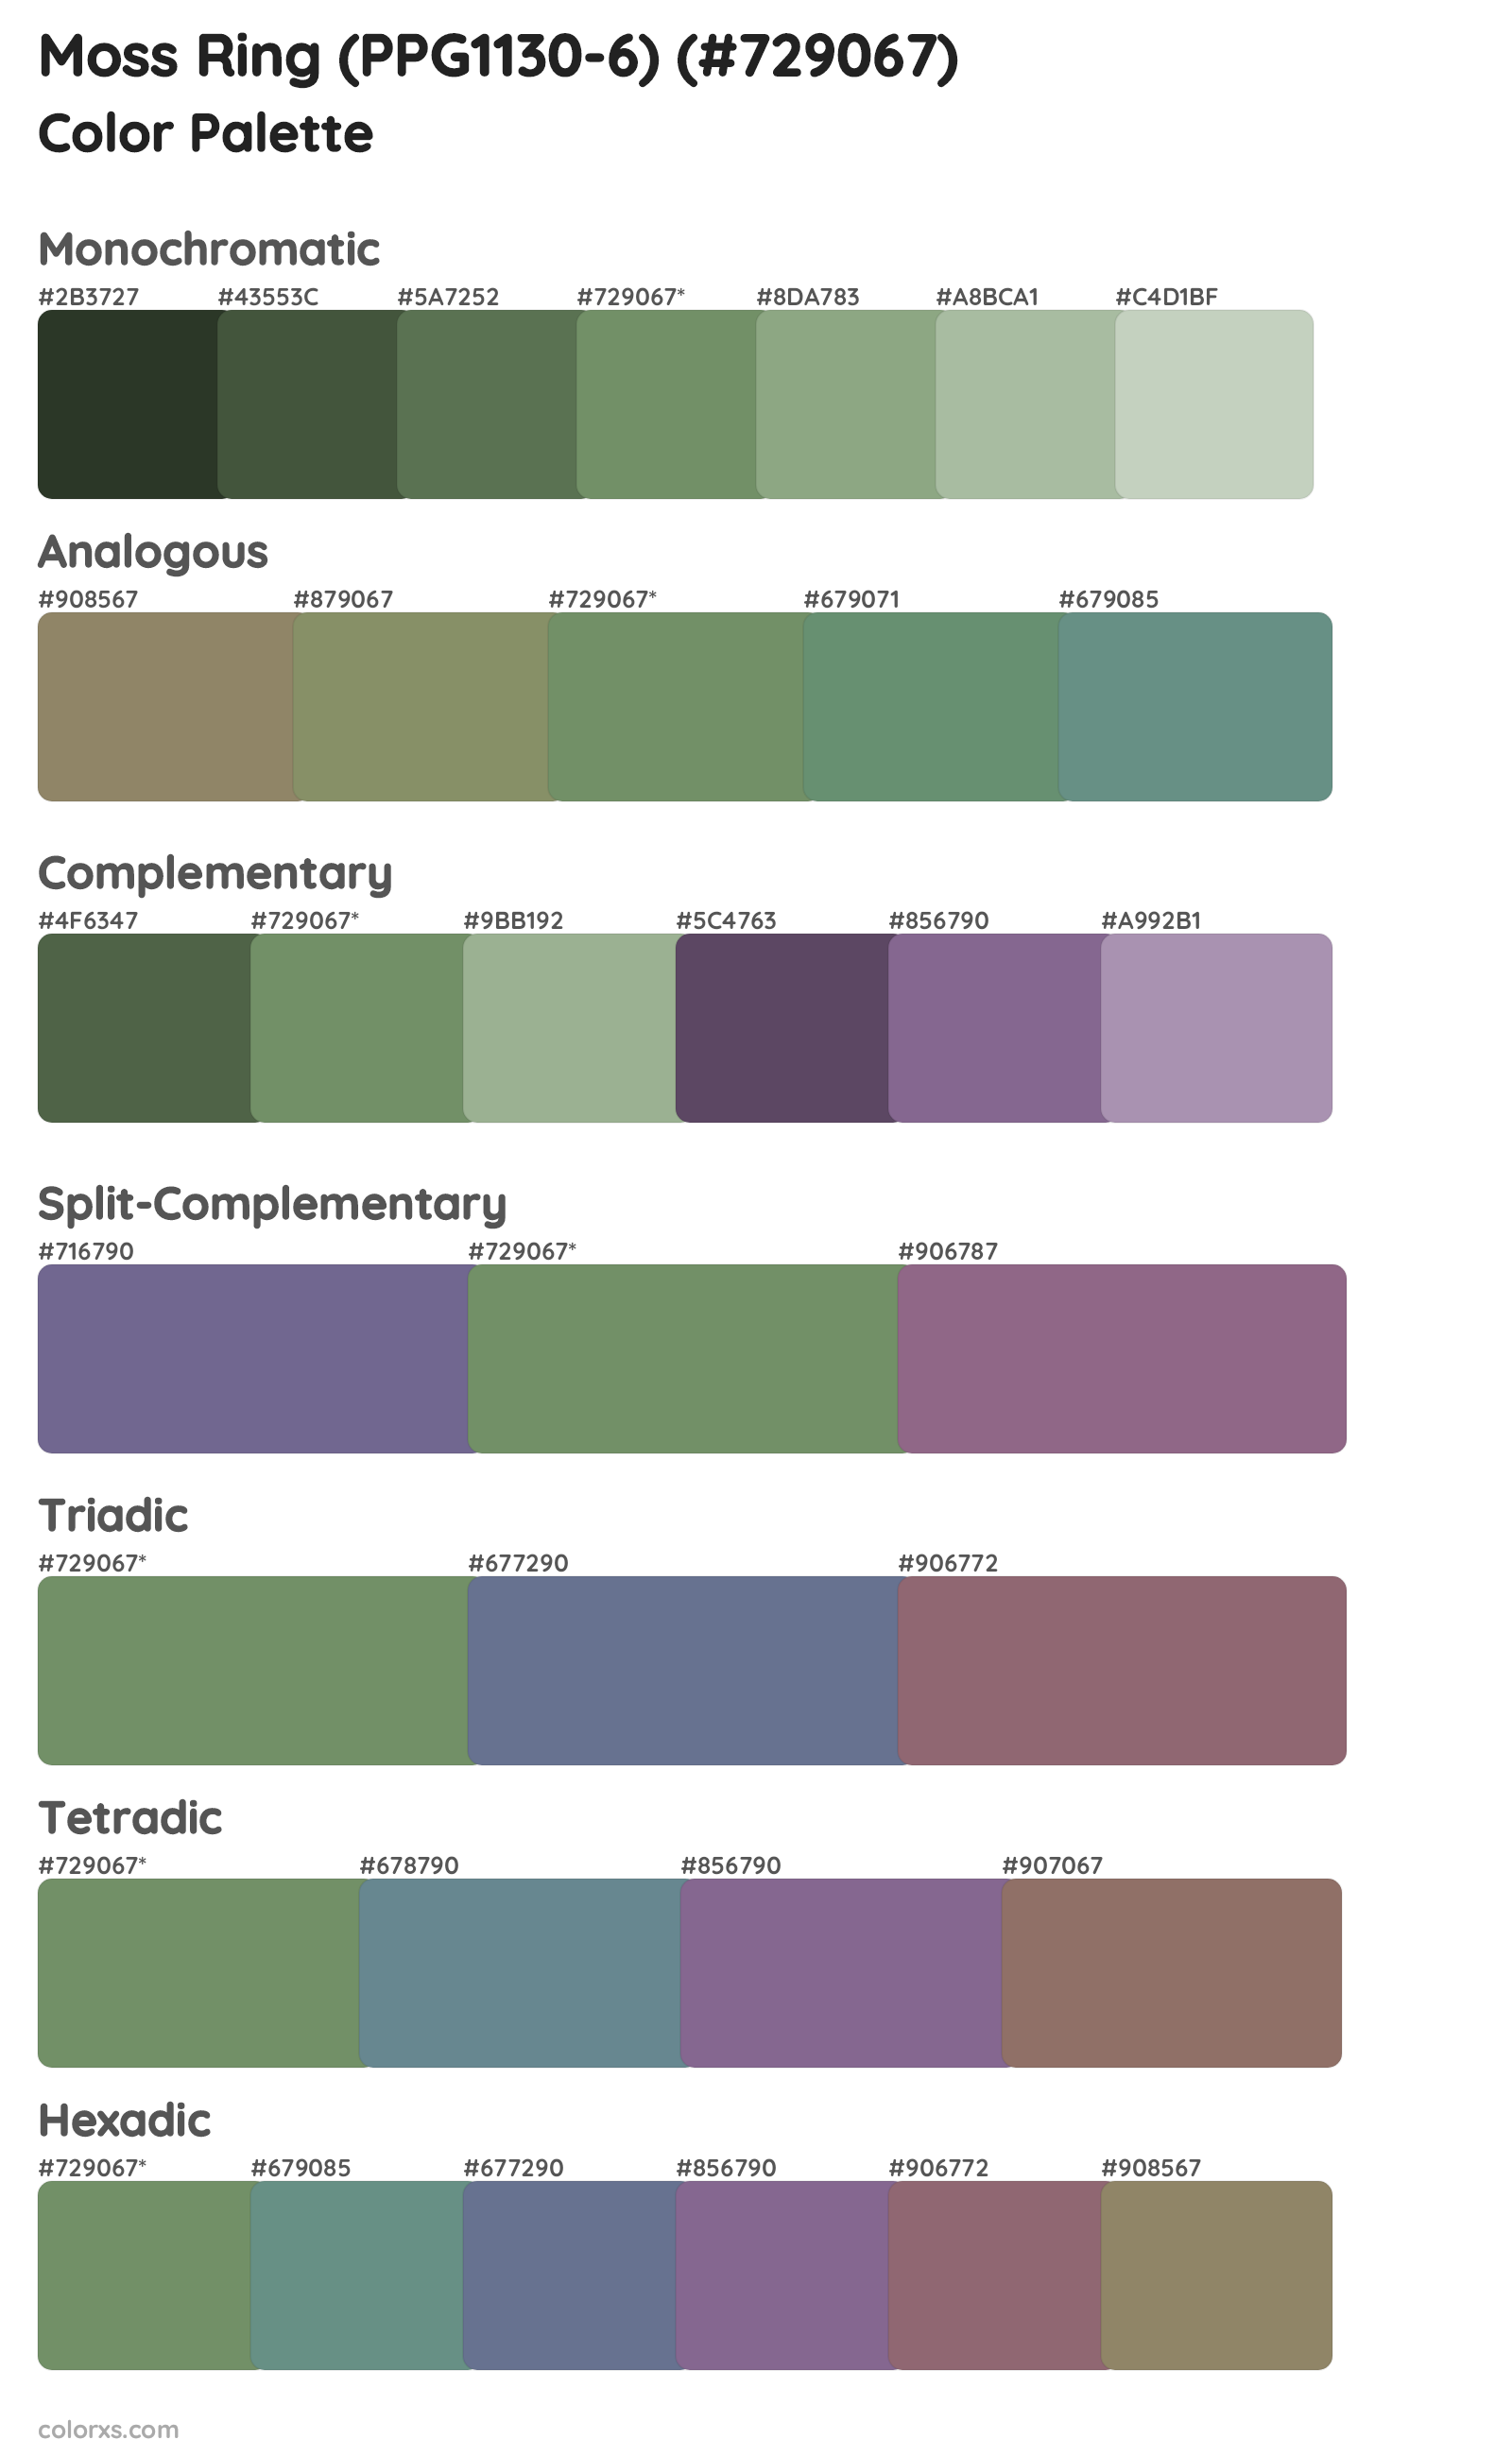 Moss Ring (PPG1130-6) Color Scheme Palettes